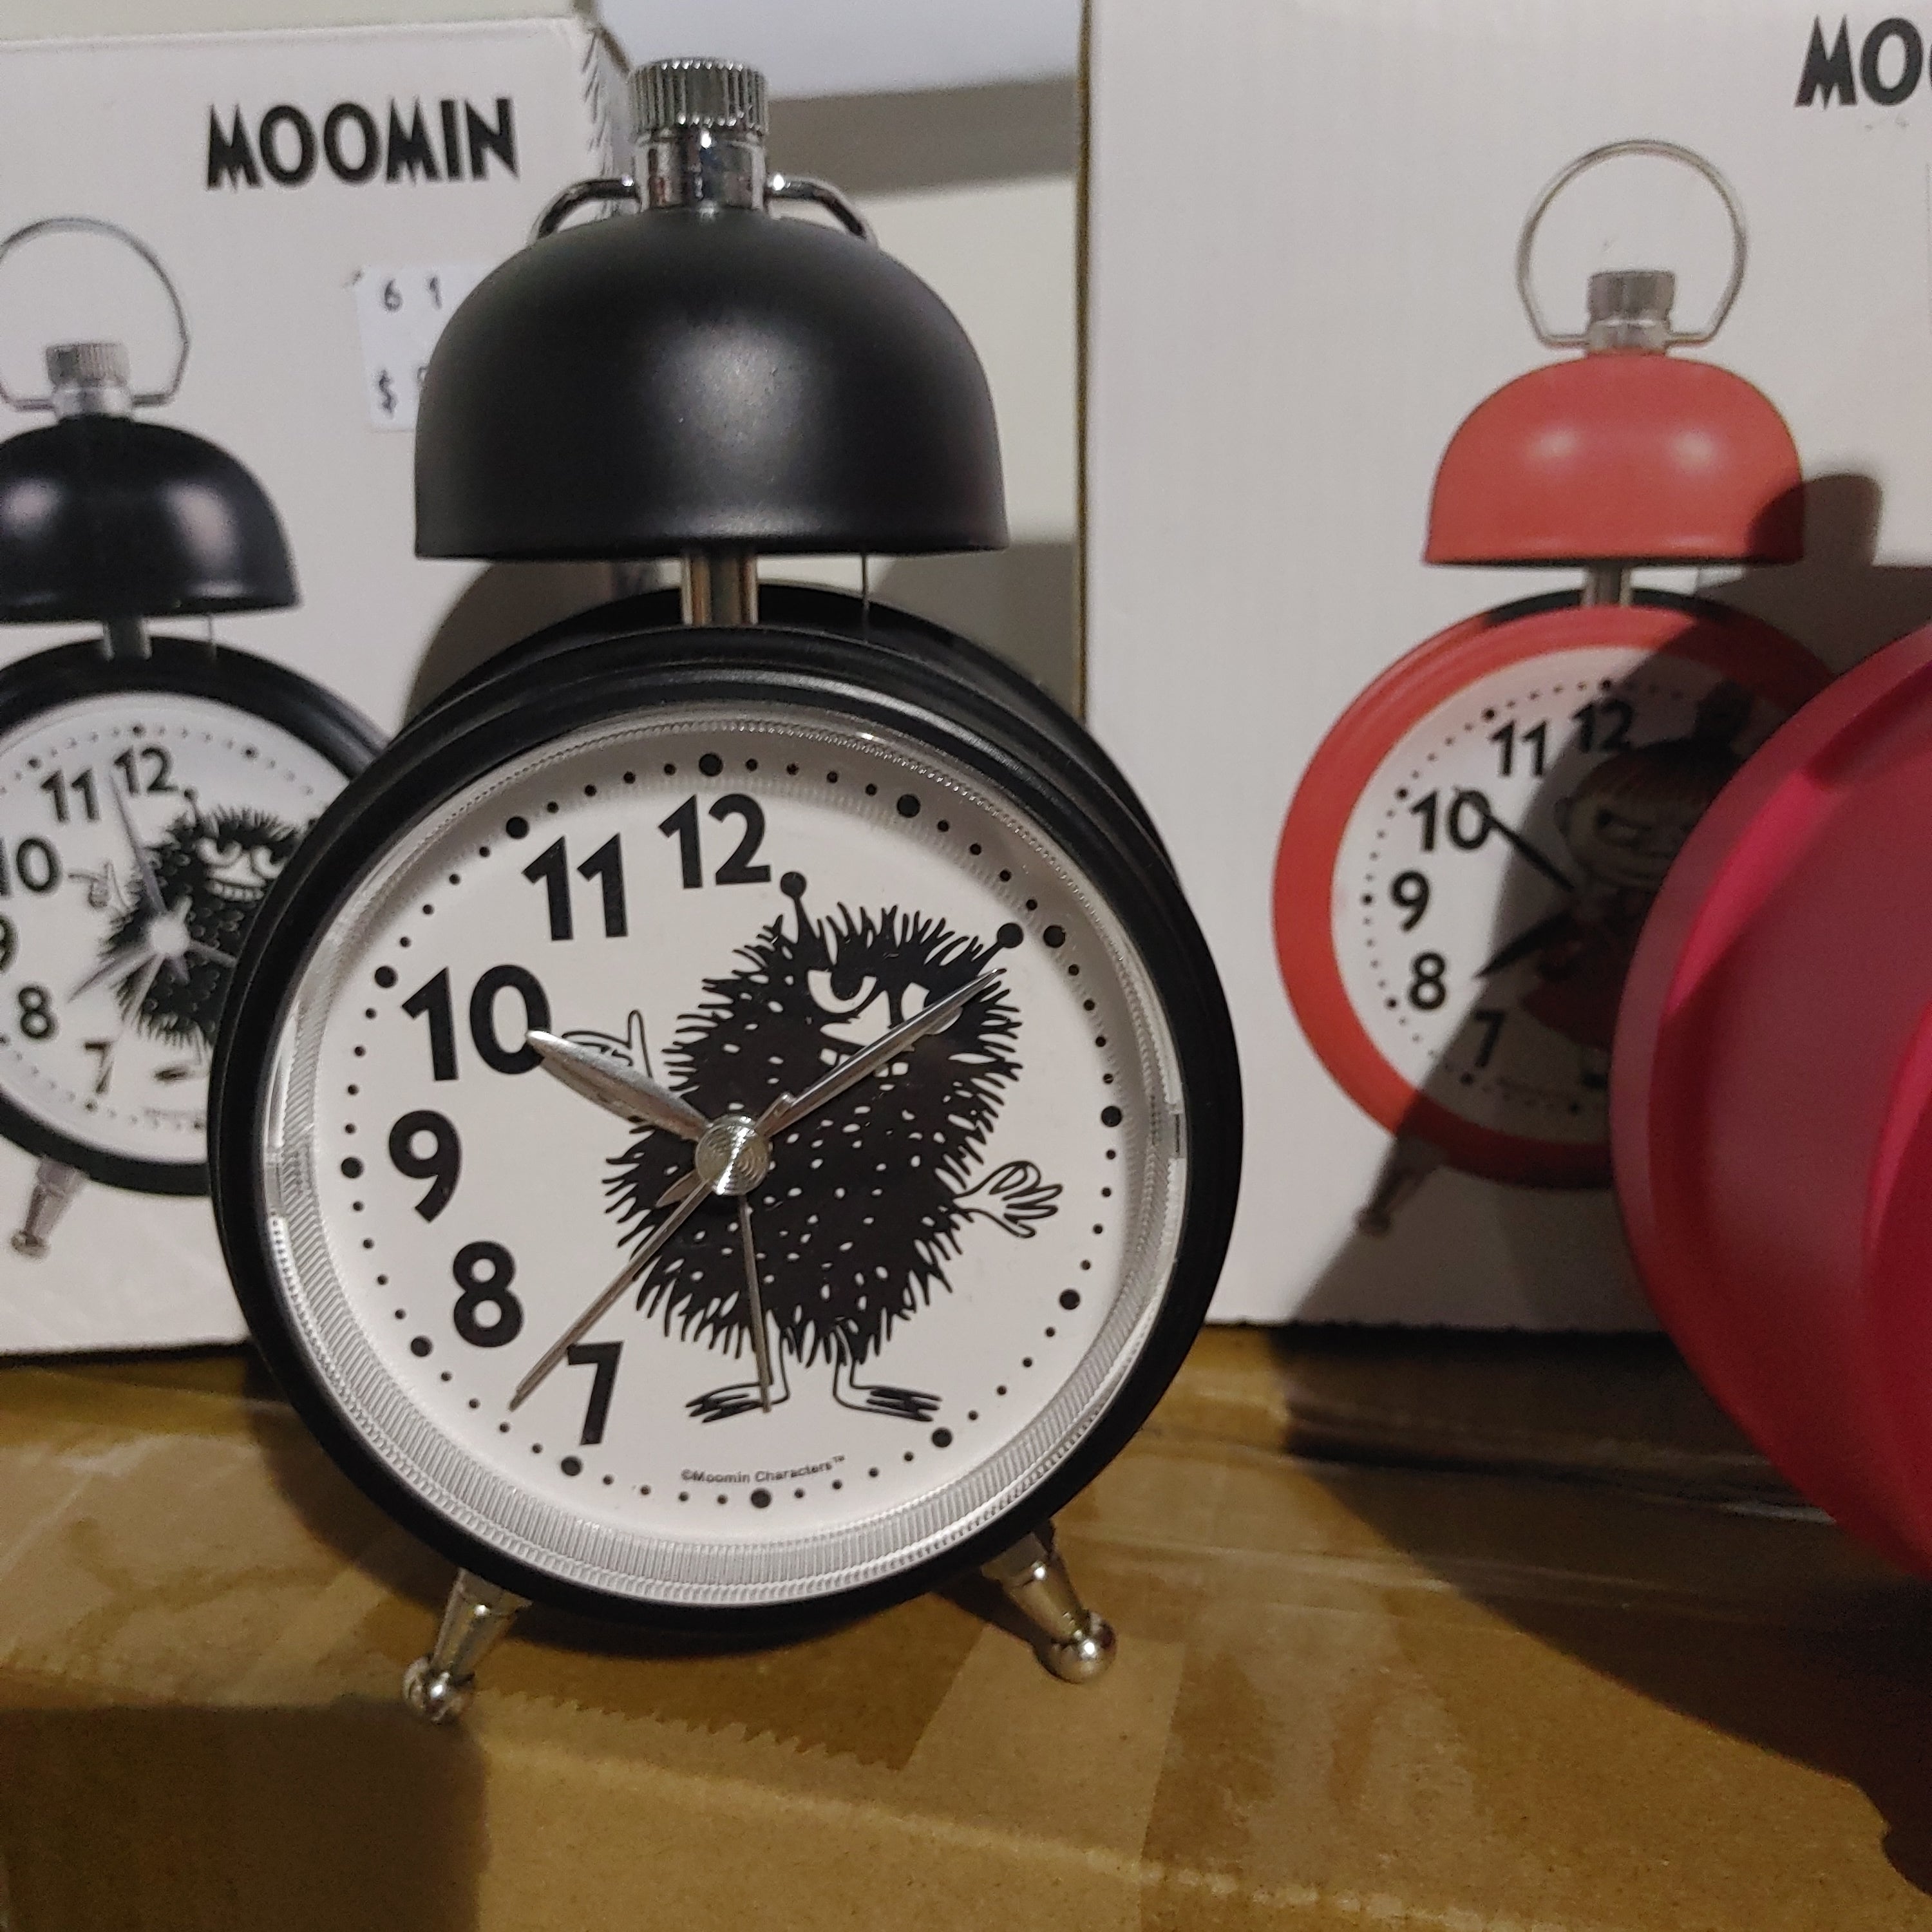 Moomin alarm clock by Saurum Stinky